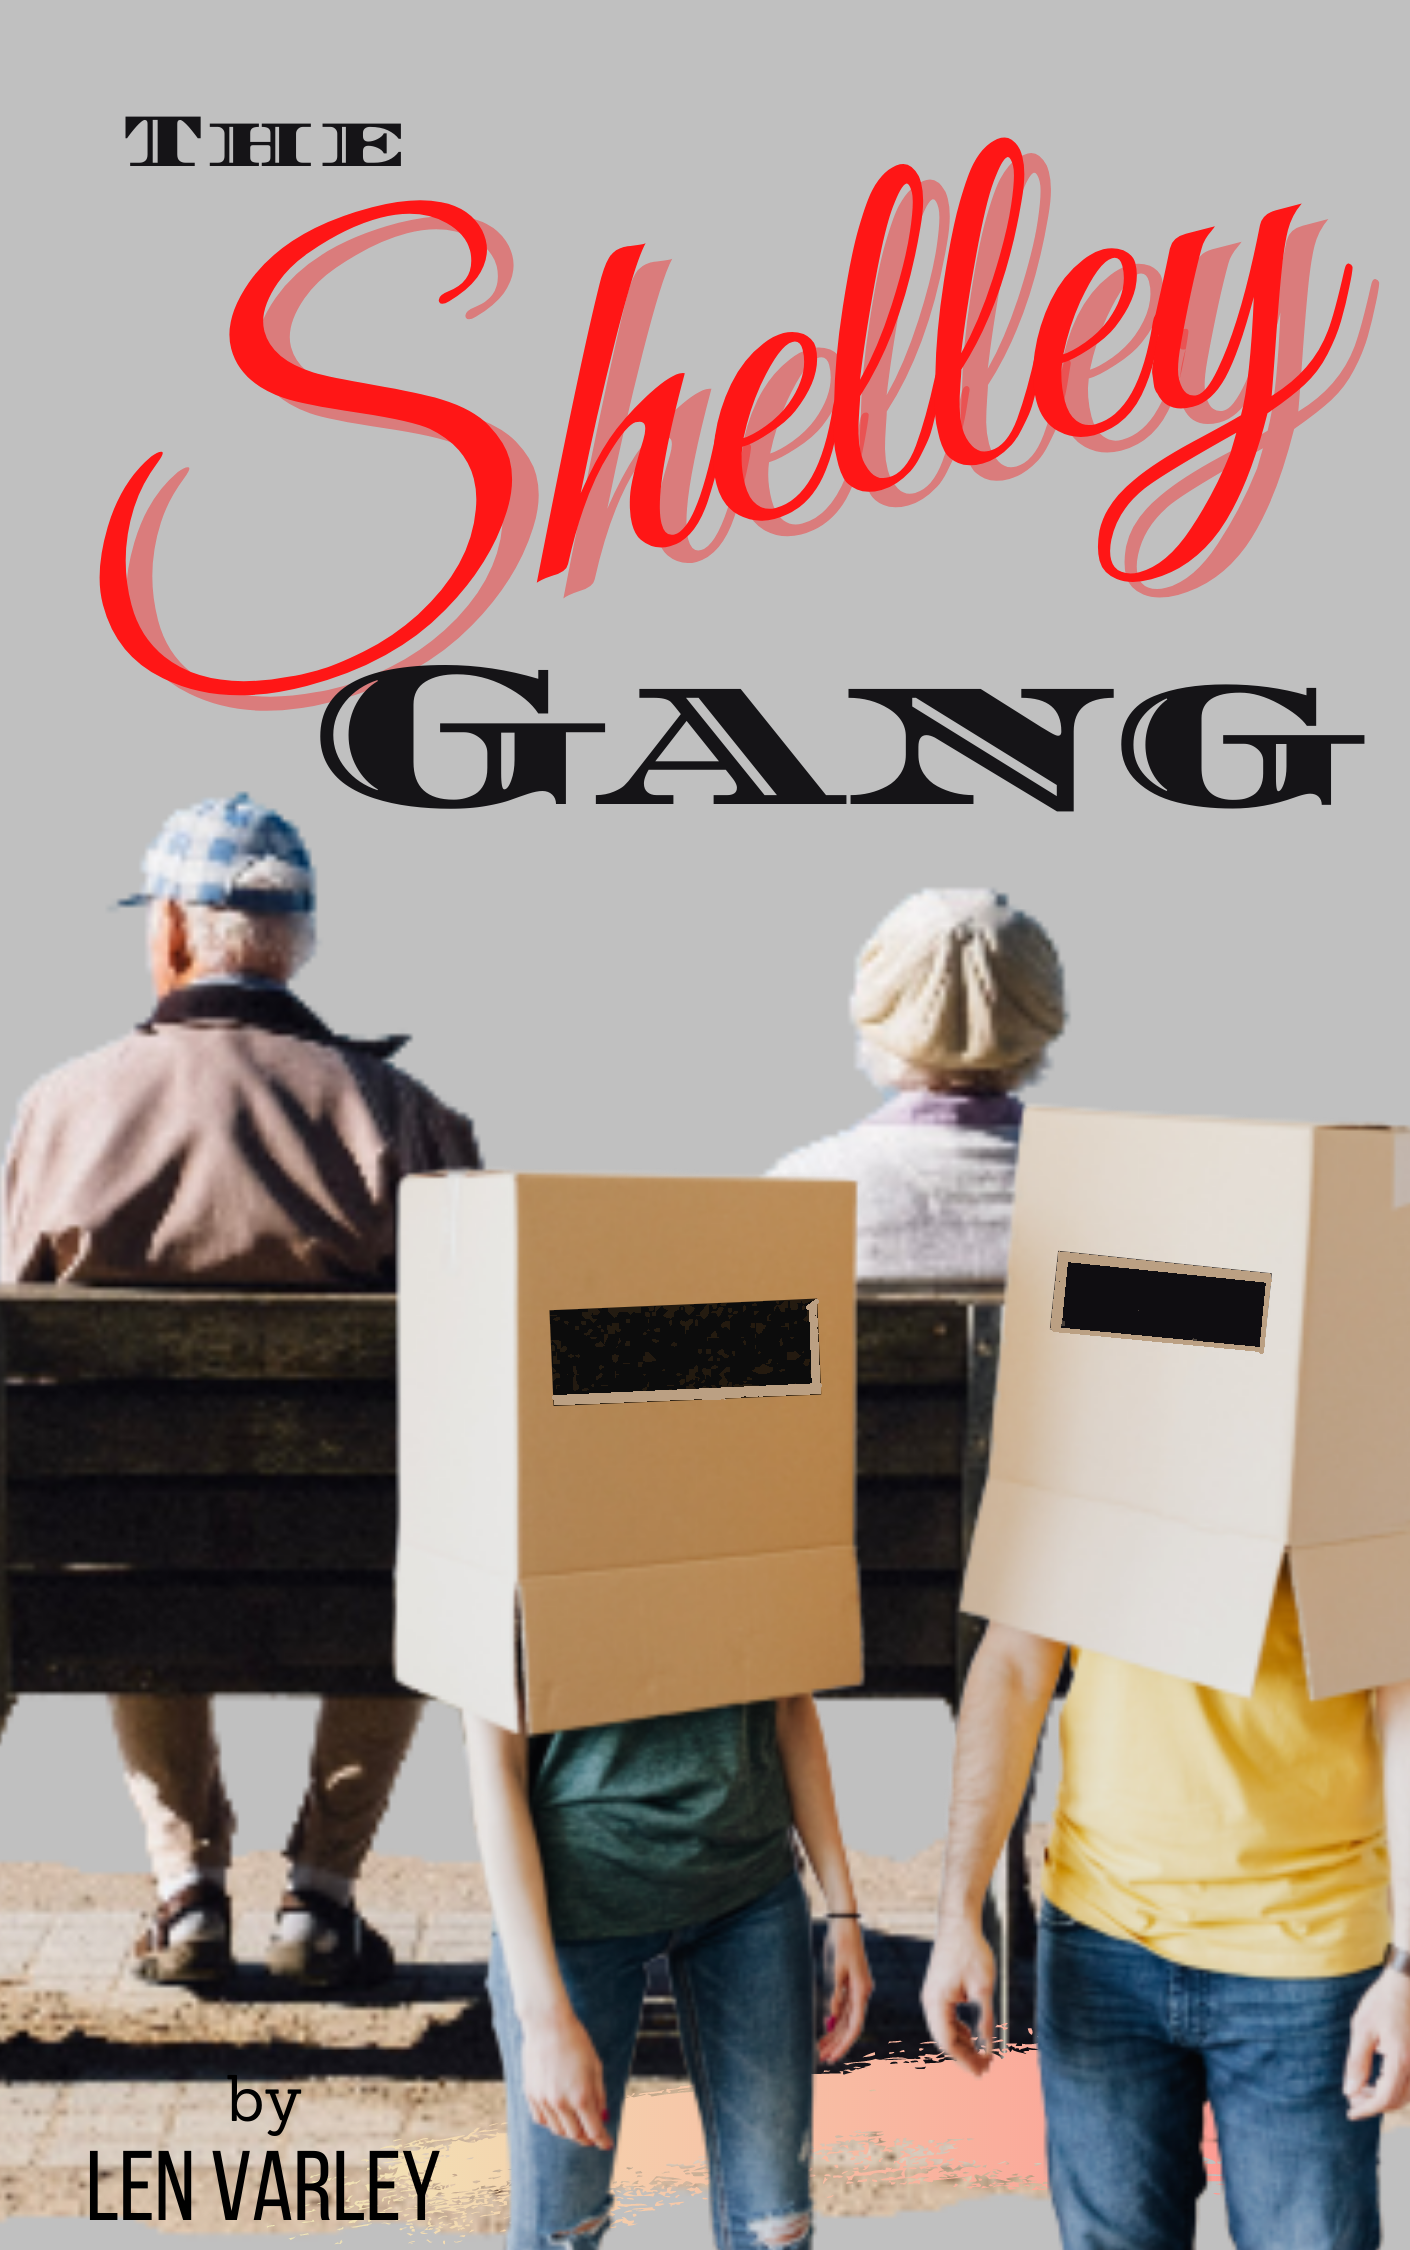 THE SHELLEY GANG